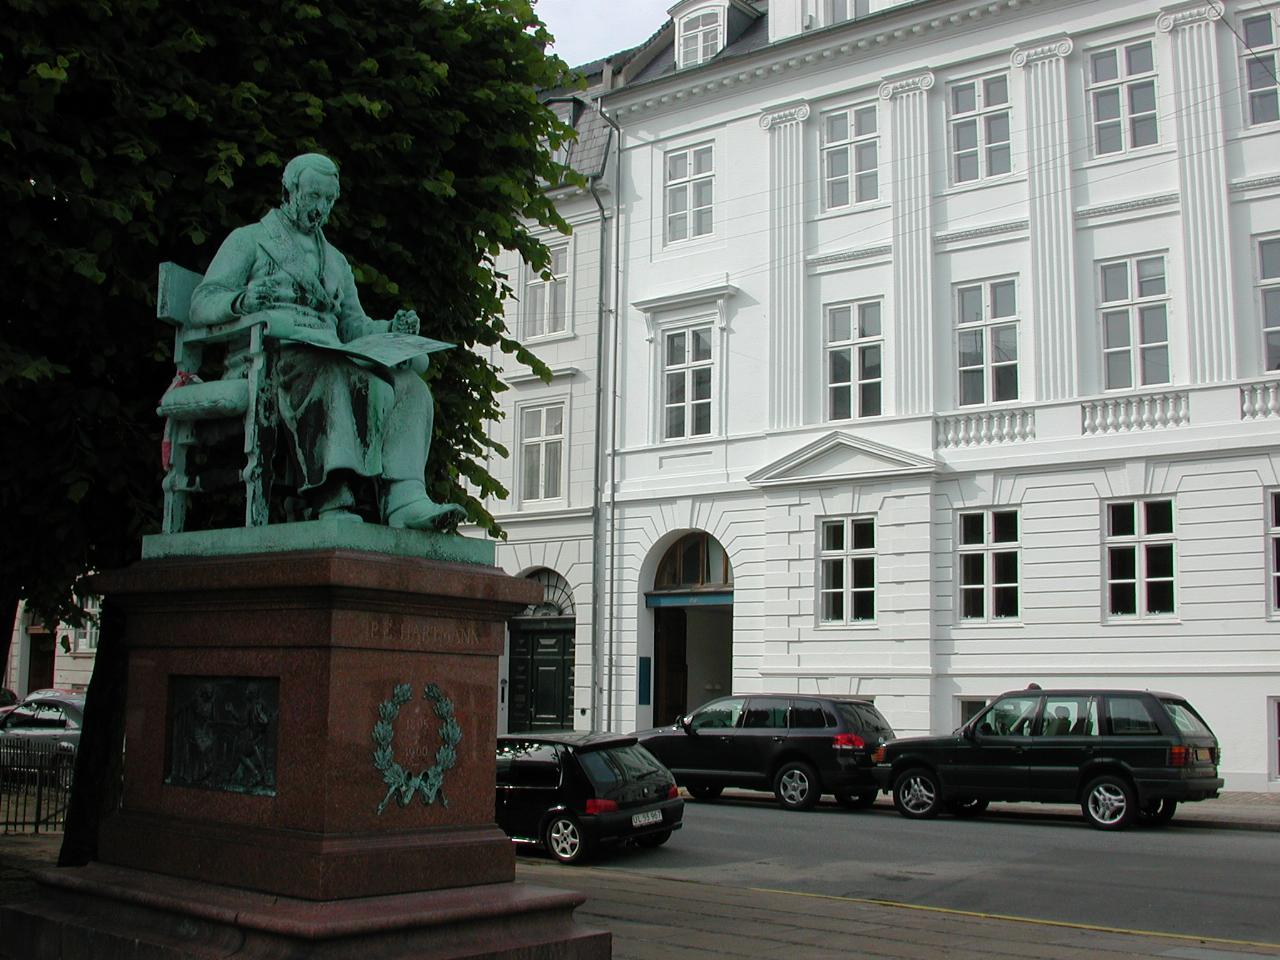 KPLU Viking Jazz: Many statues in Scandinavia; this one of P. E. Hartmann on Sankt Annæ Plads